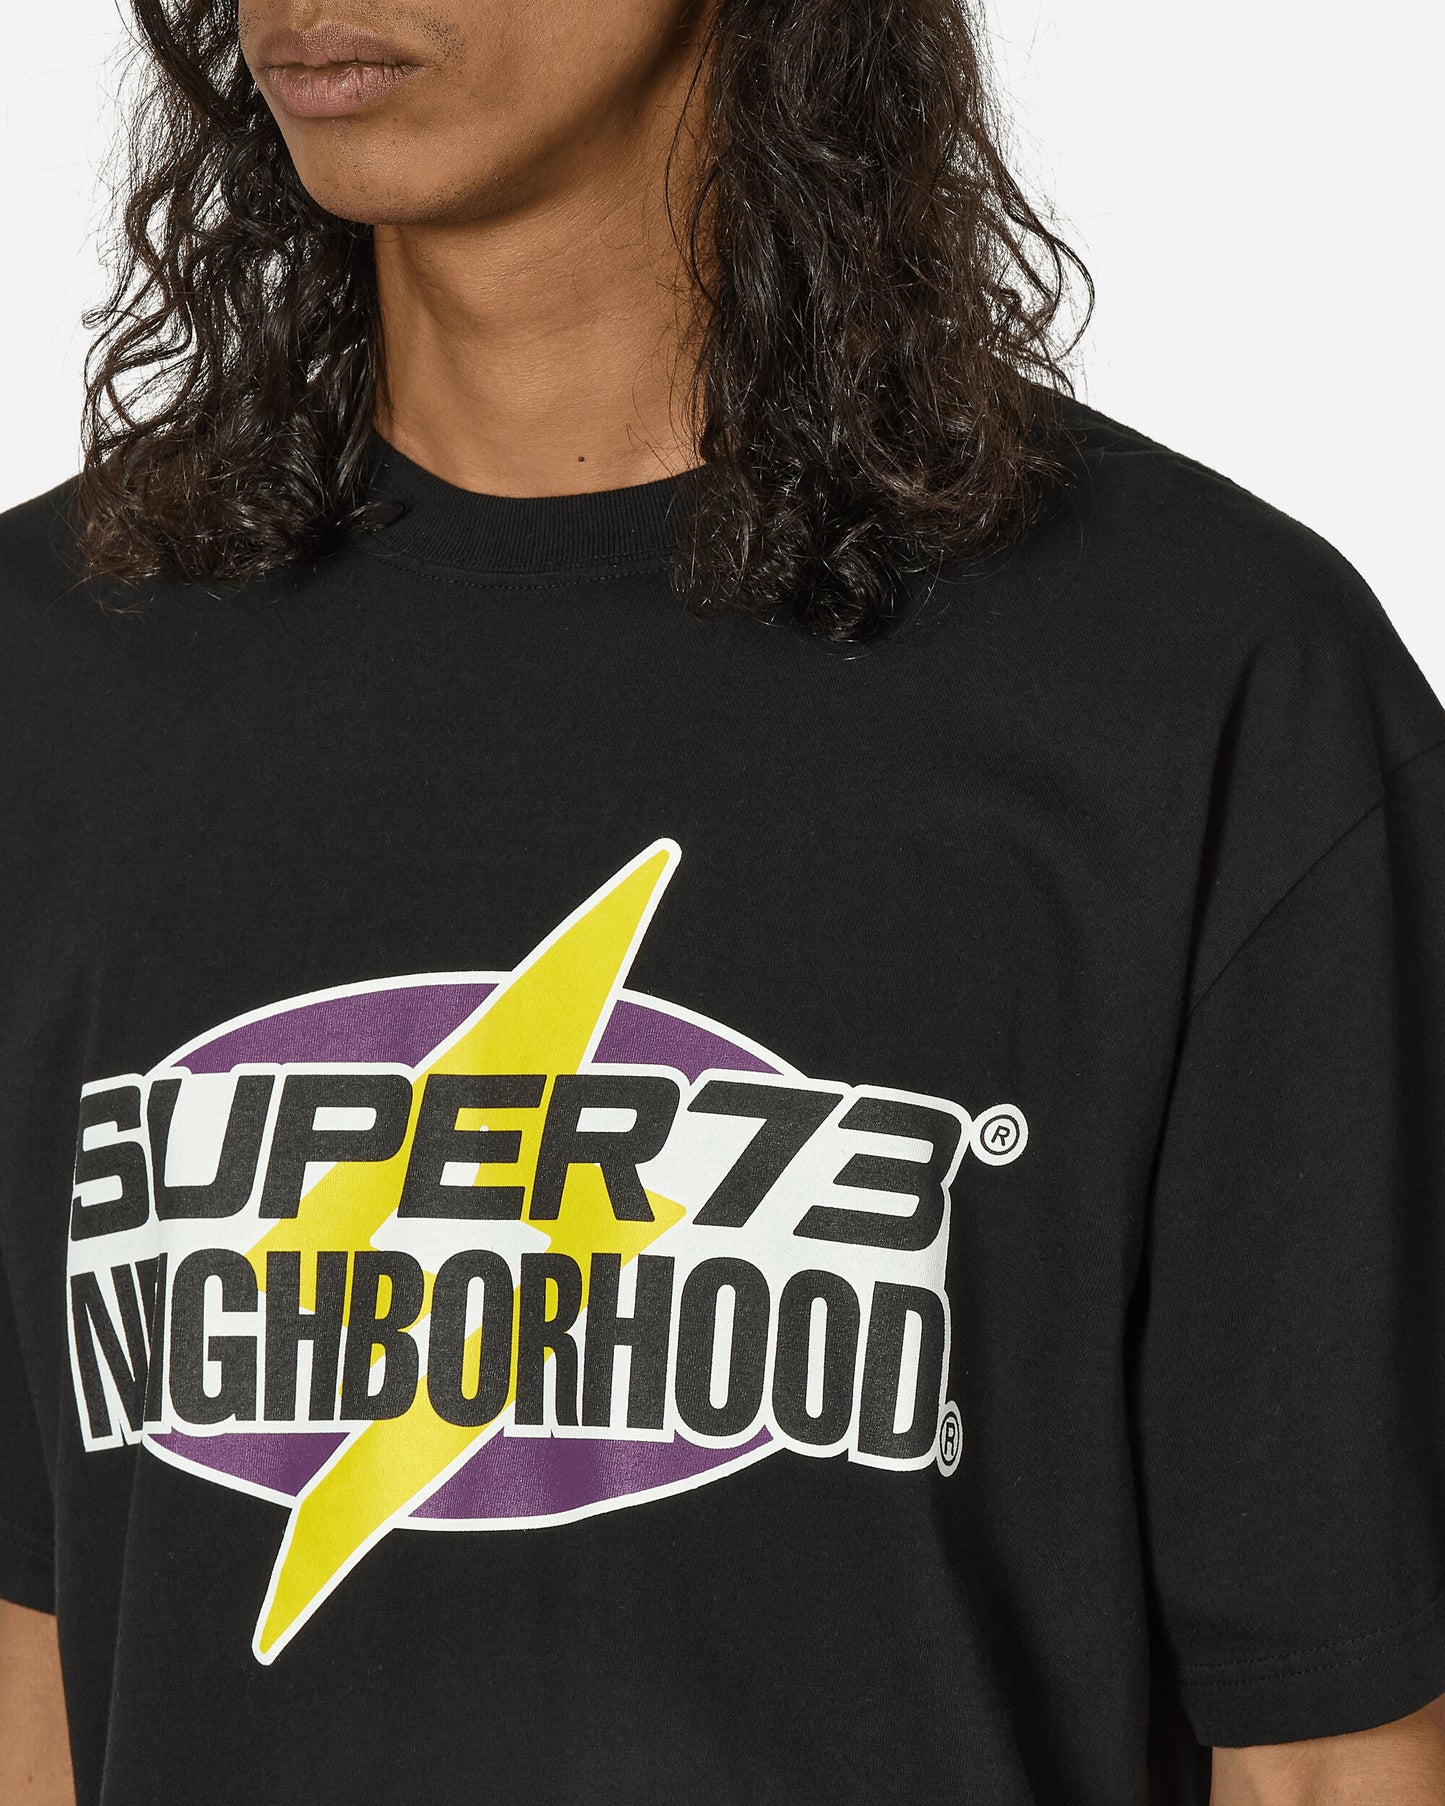 Neighborhood Nh X Super73 . Tee Ss Black T-Shirts Shortsleeve 241PCYSN-ST01 BK